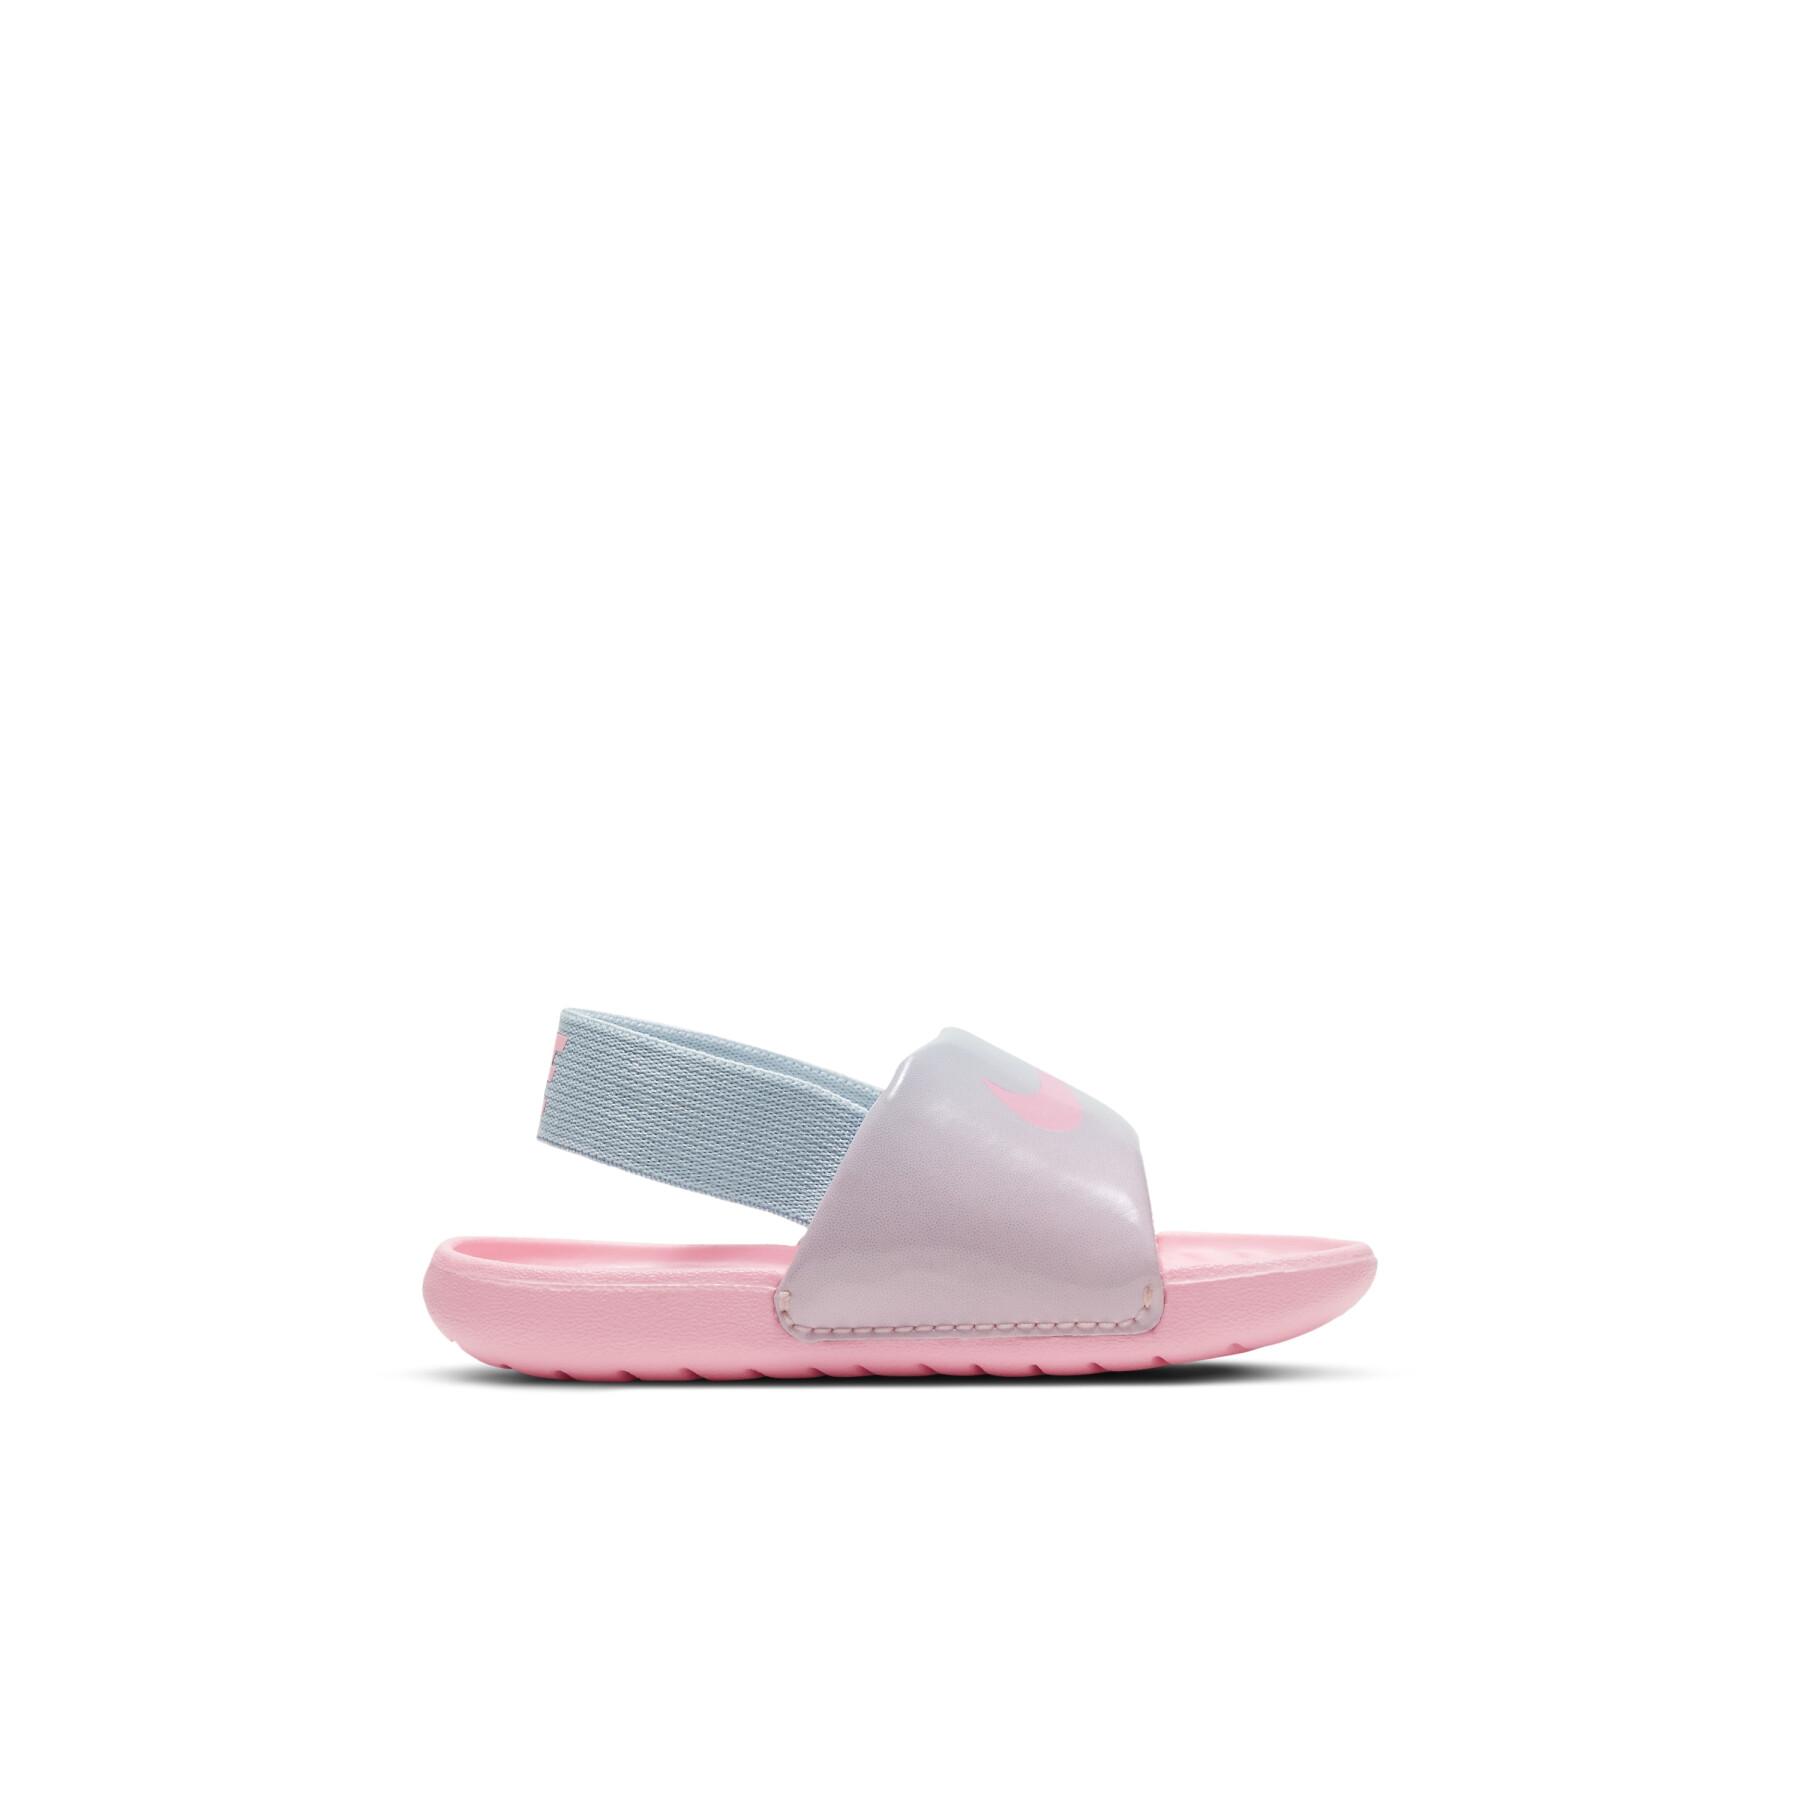 Baby girl shoes Nike Kawa SE